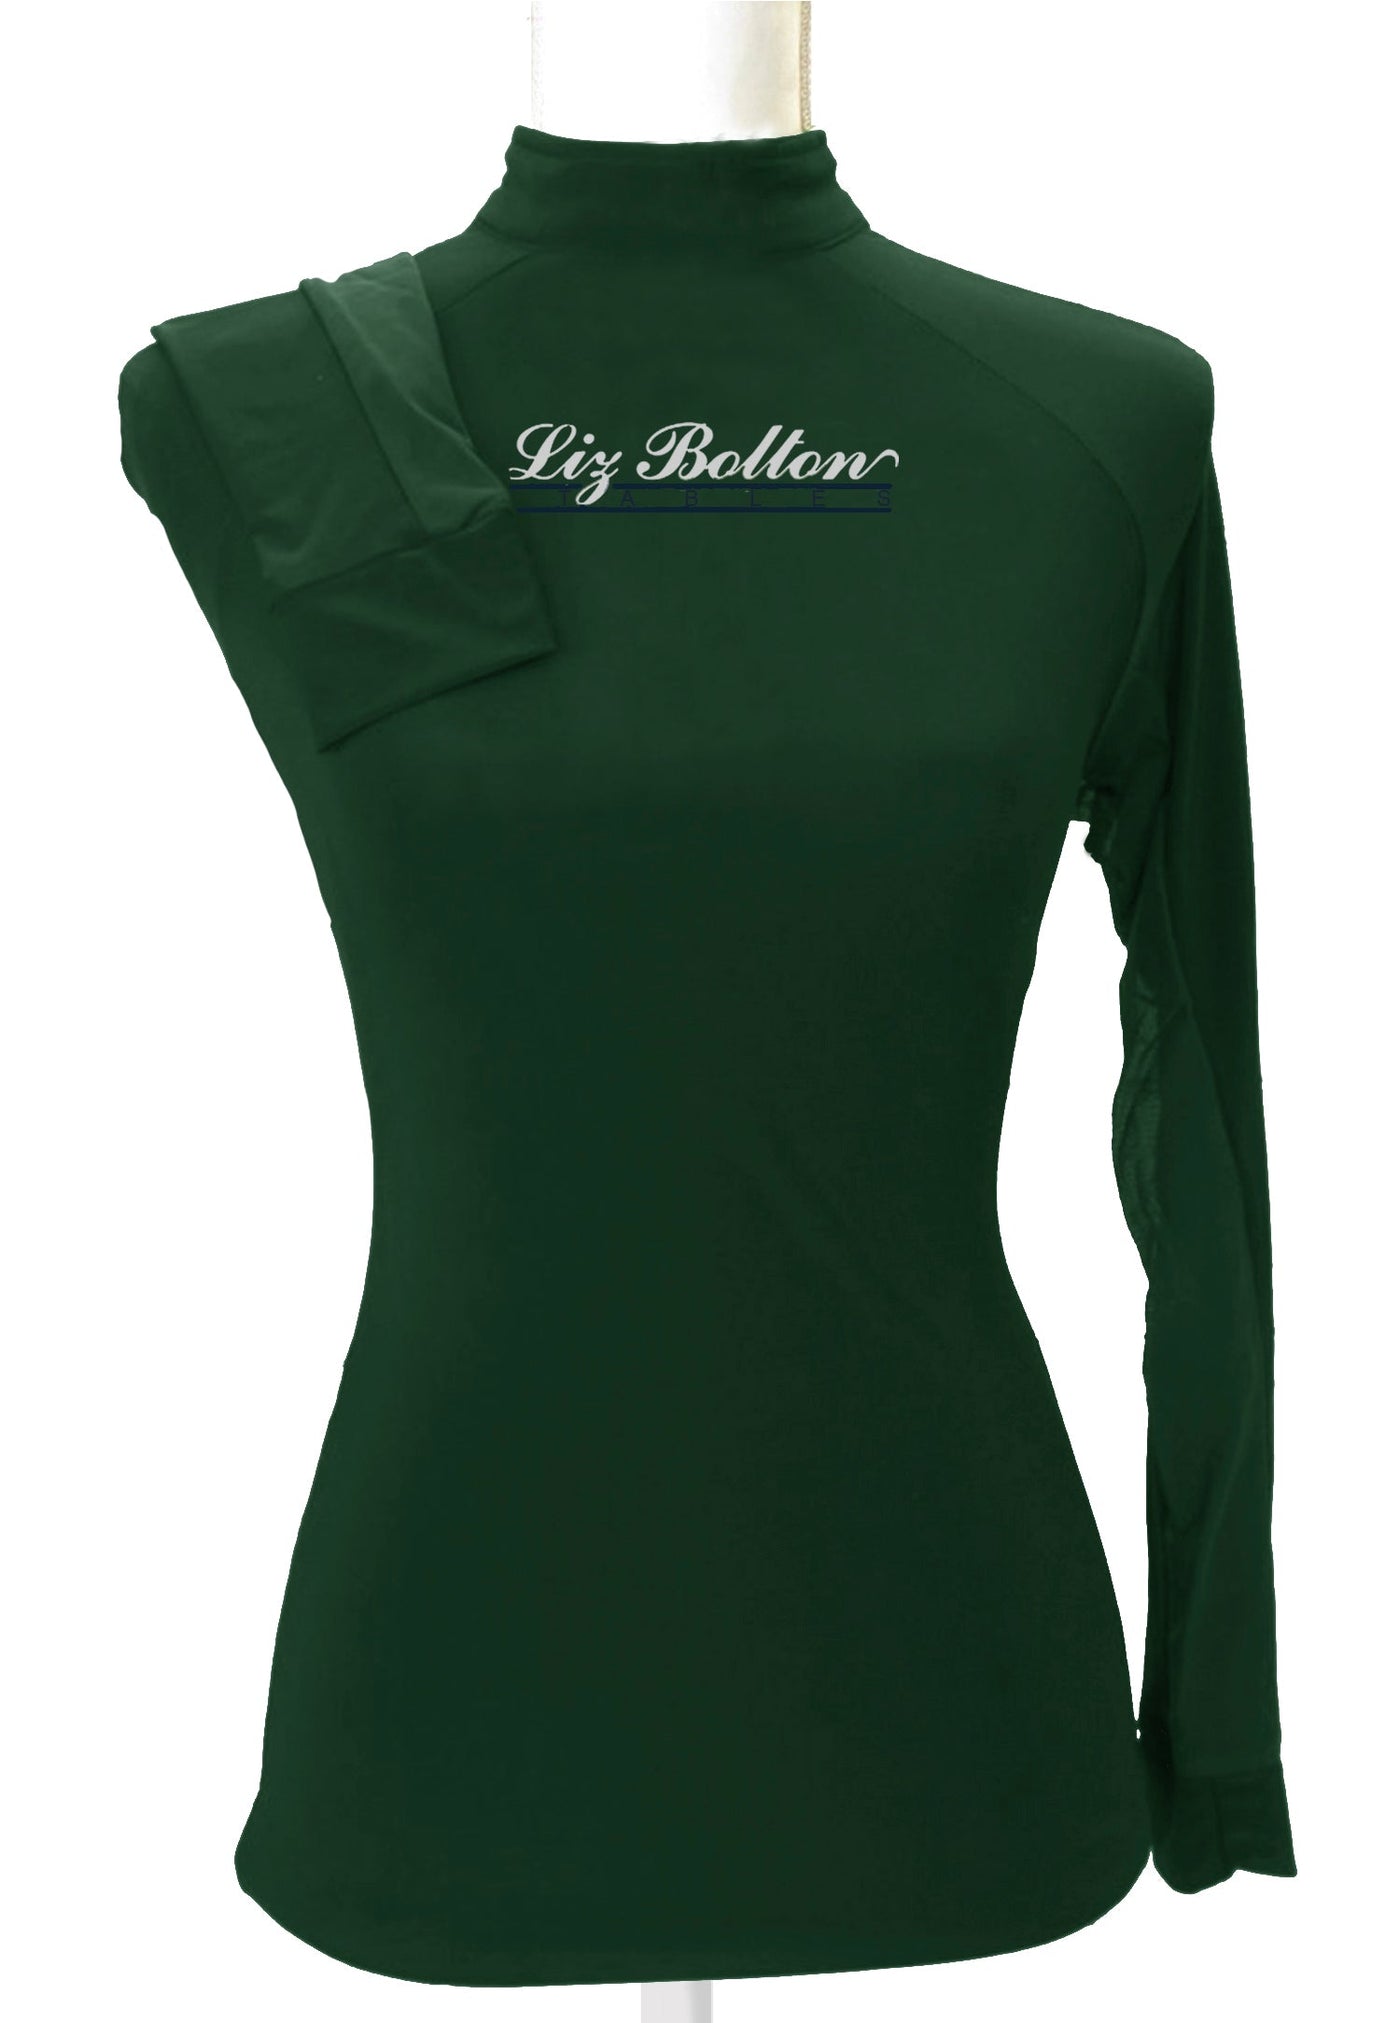 Liz Bolton Stables Custom Sun Shirt - Hunter Green      Adult + Youth Sizes